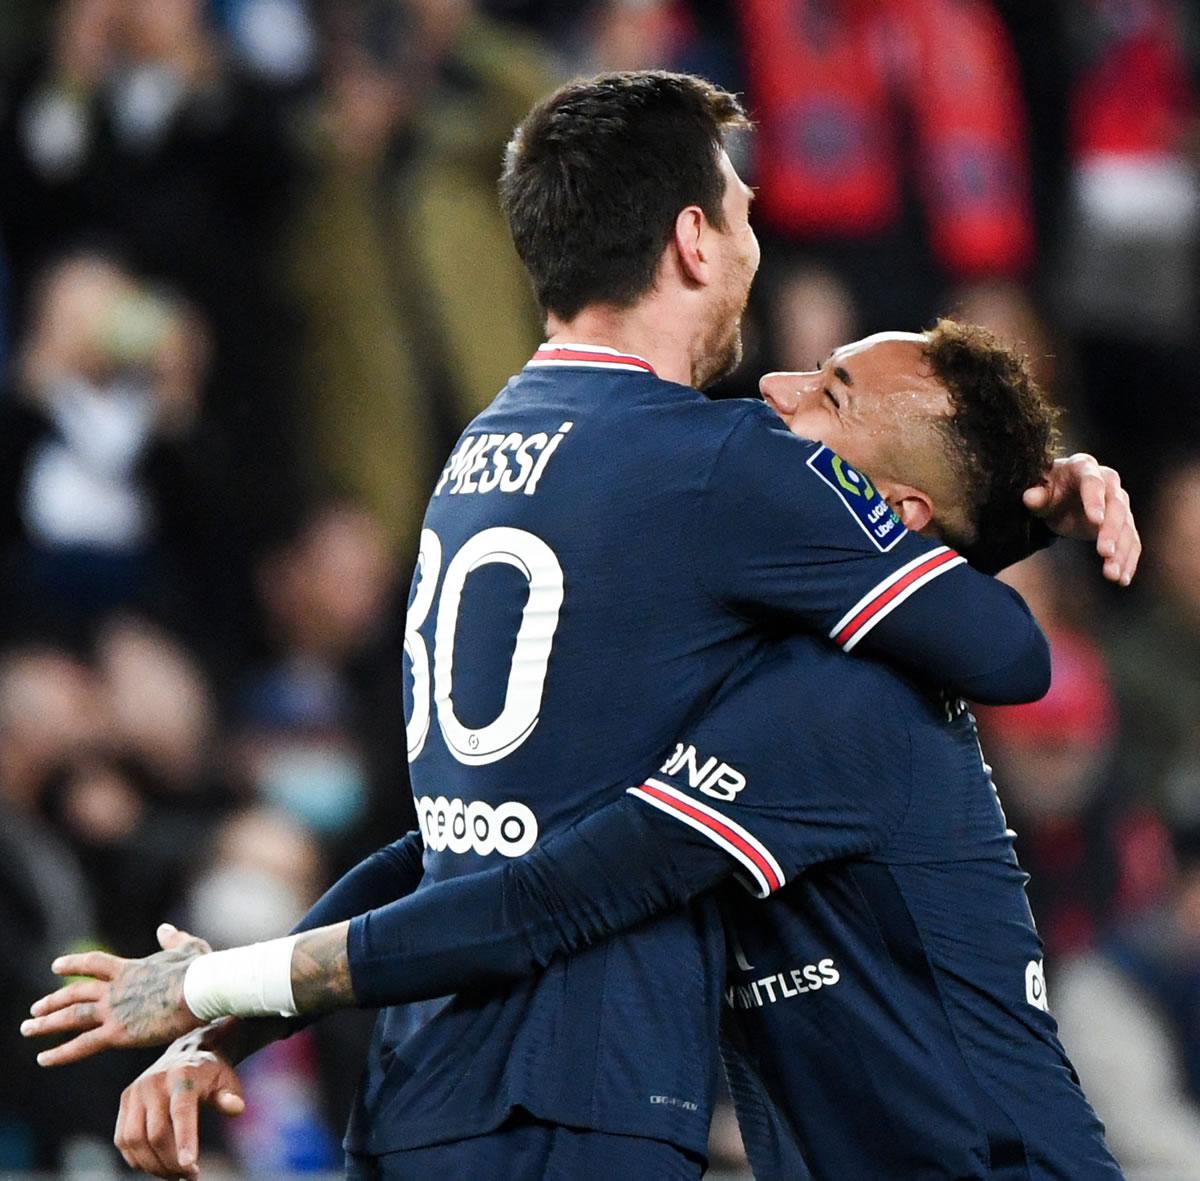 Messi celebra su gol con Neymar.